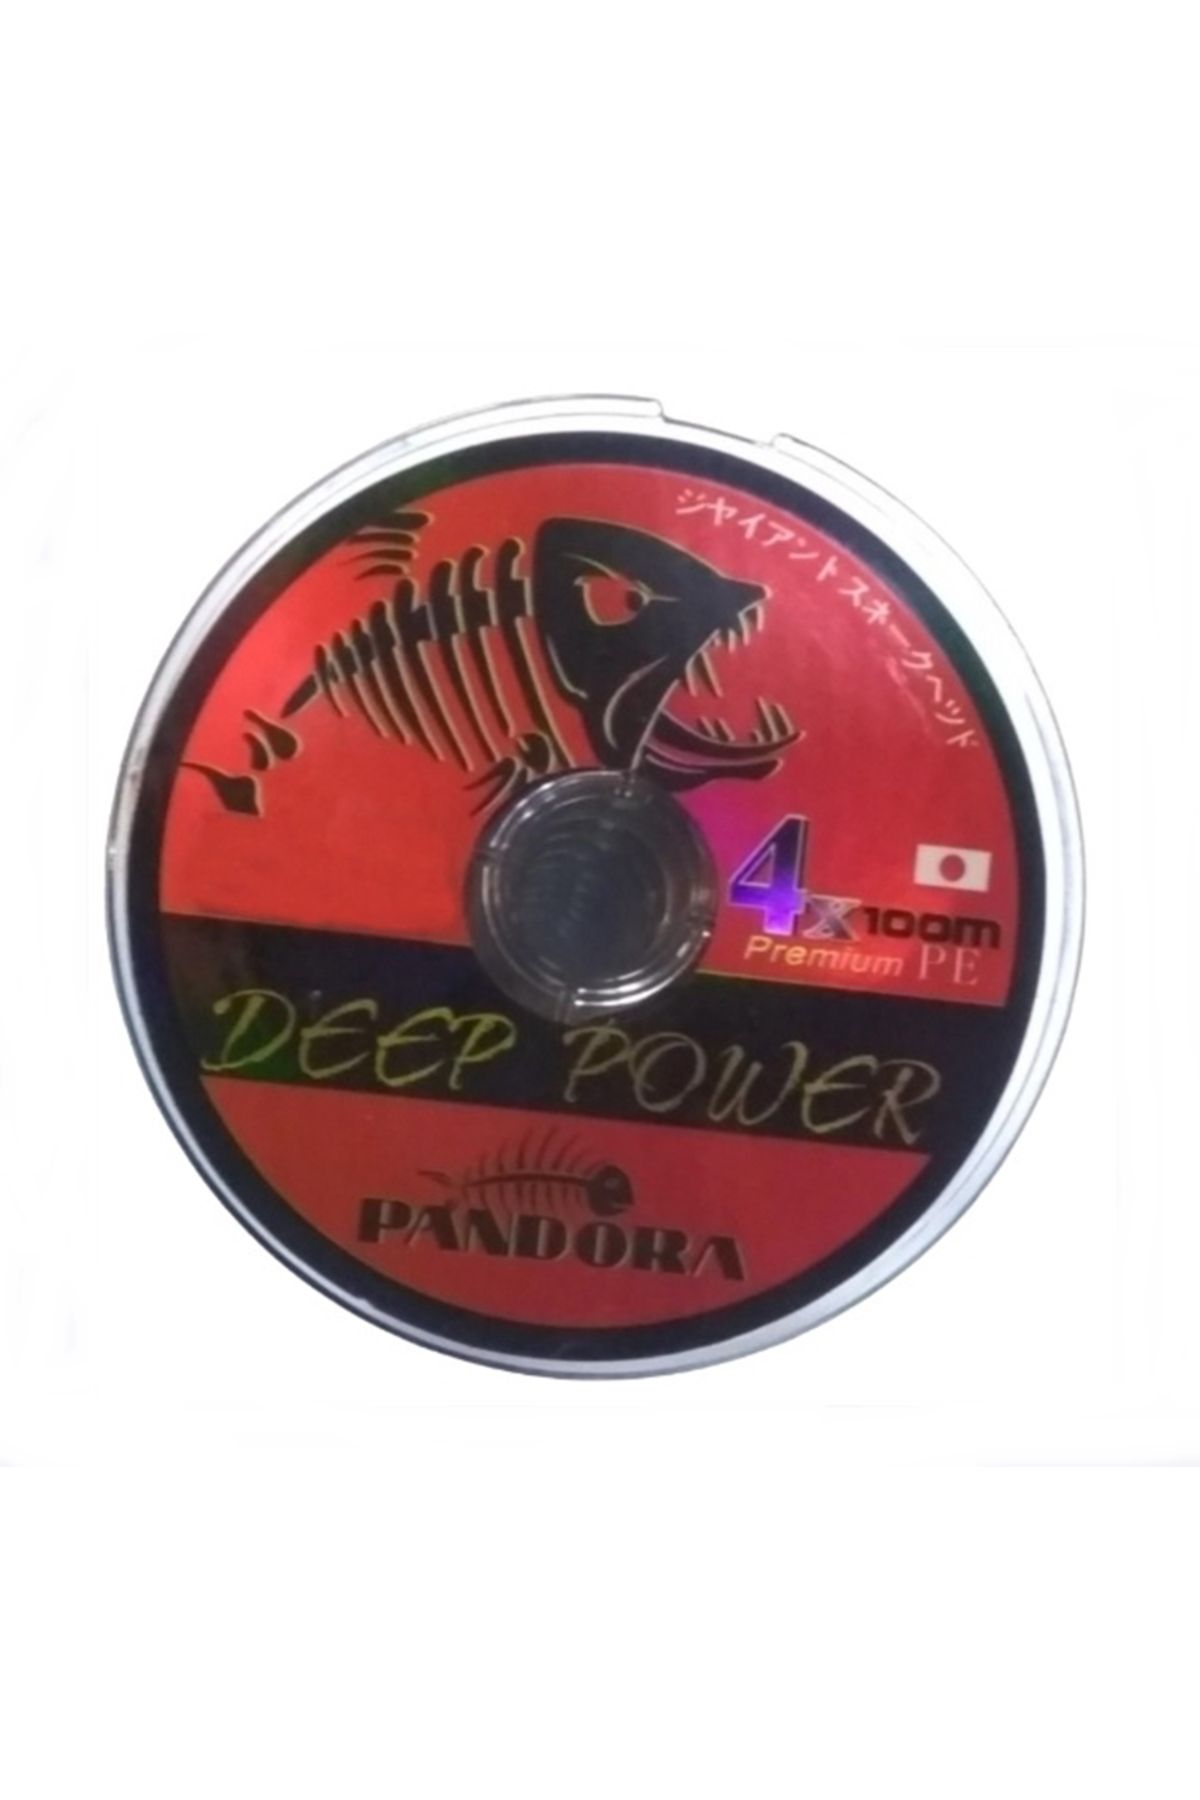 Pandora Deep Power 4x -100mt Ipek Misina-26mm-17,5 Test